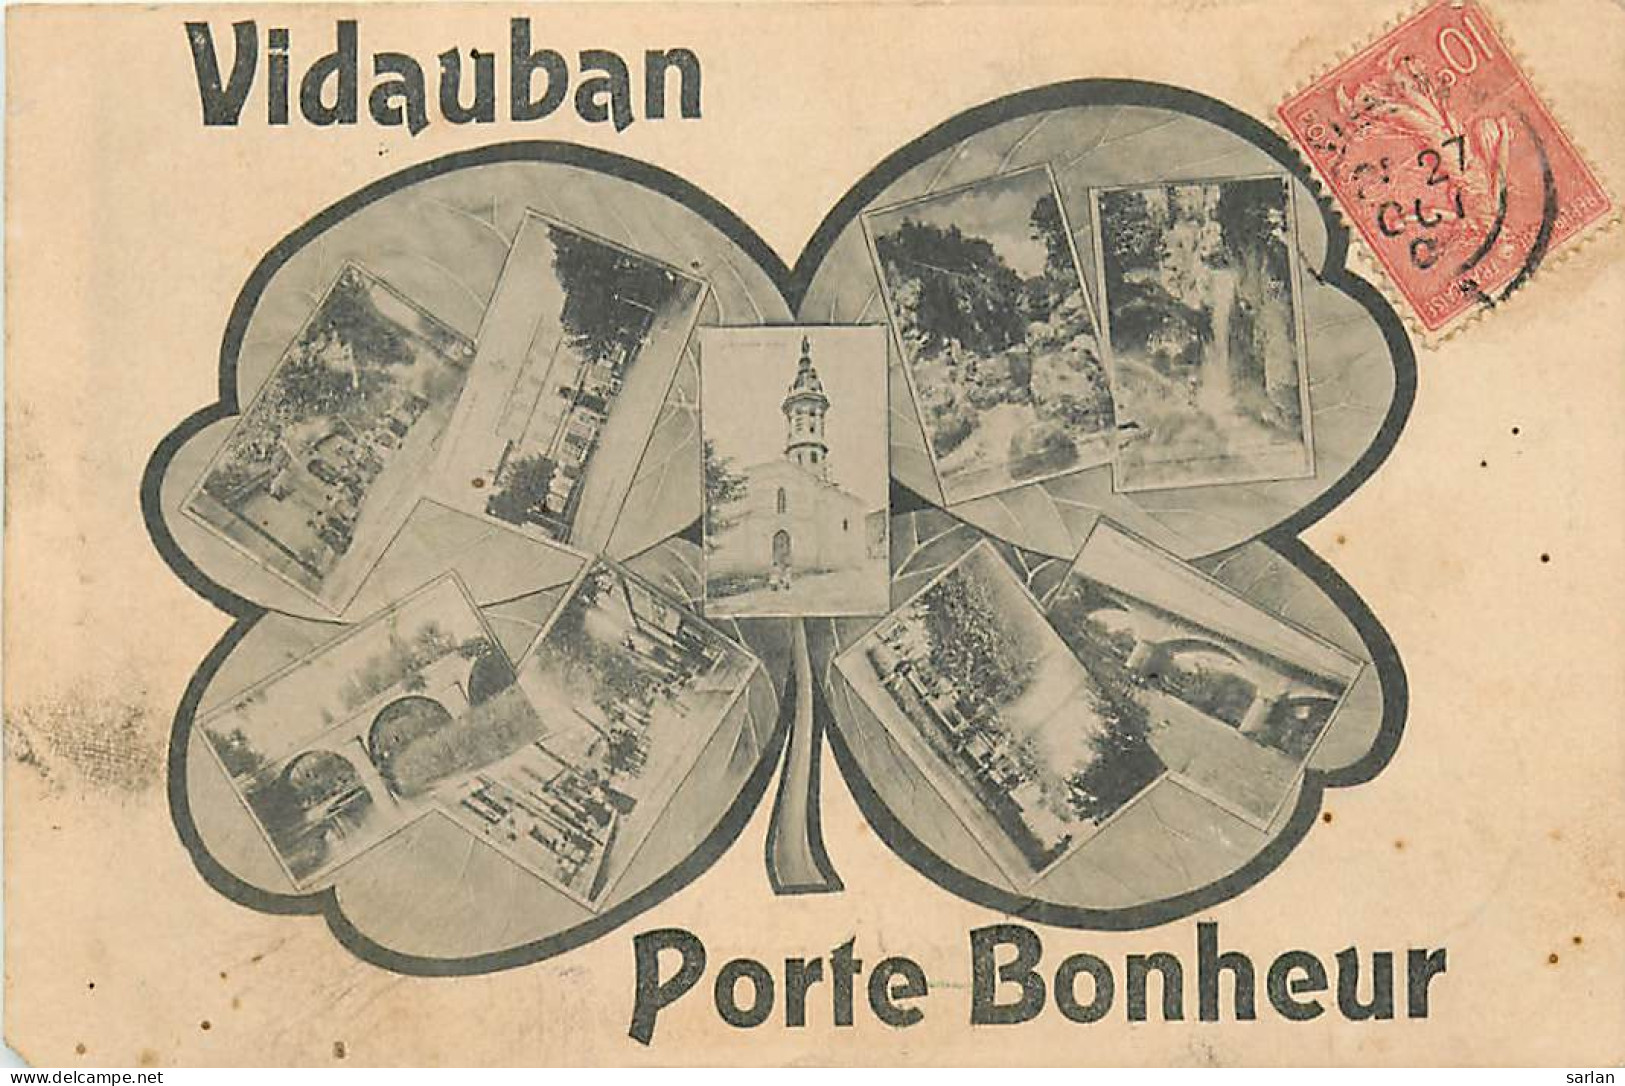 83  , VIDAUBAN , Porte Bonheur , * 237 53 - Vidauban